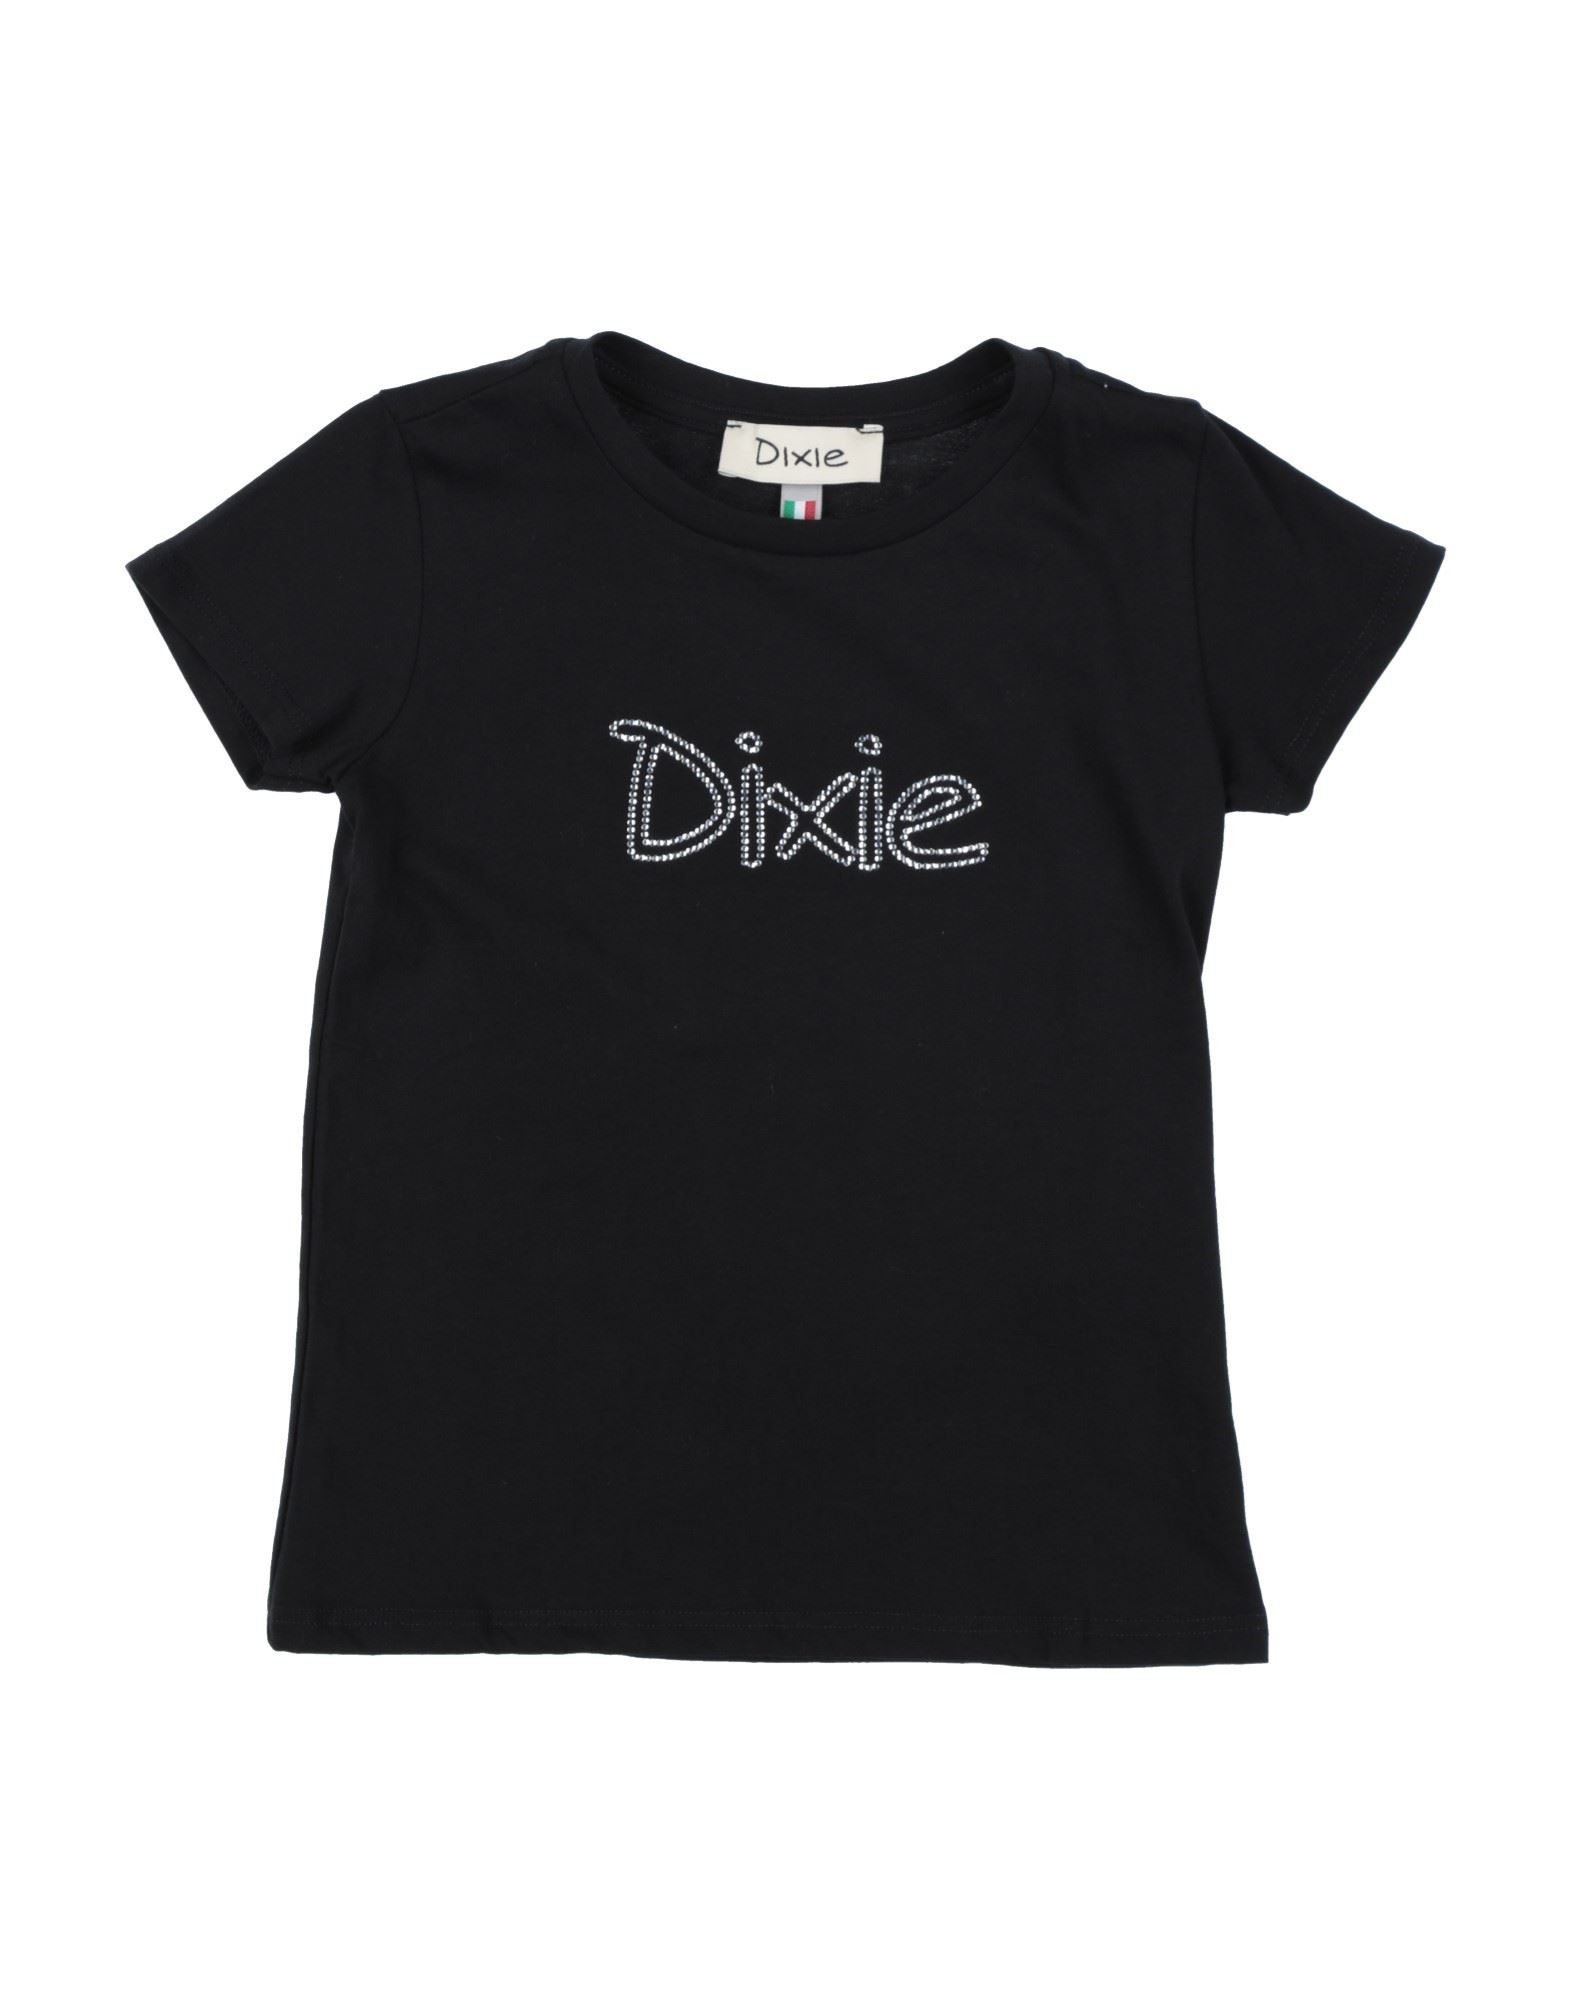 Dixie Kids' T-shirts In Black